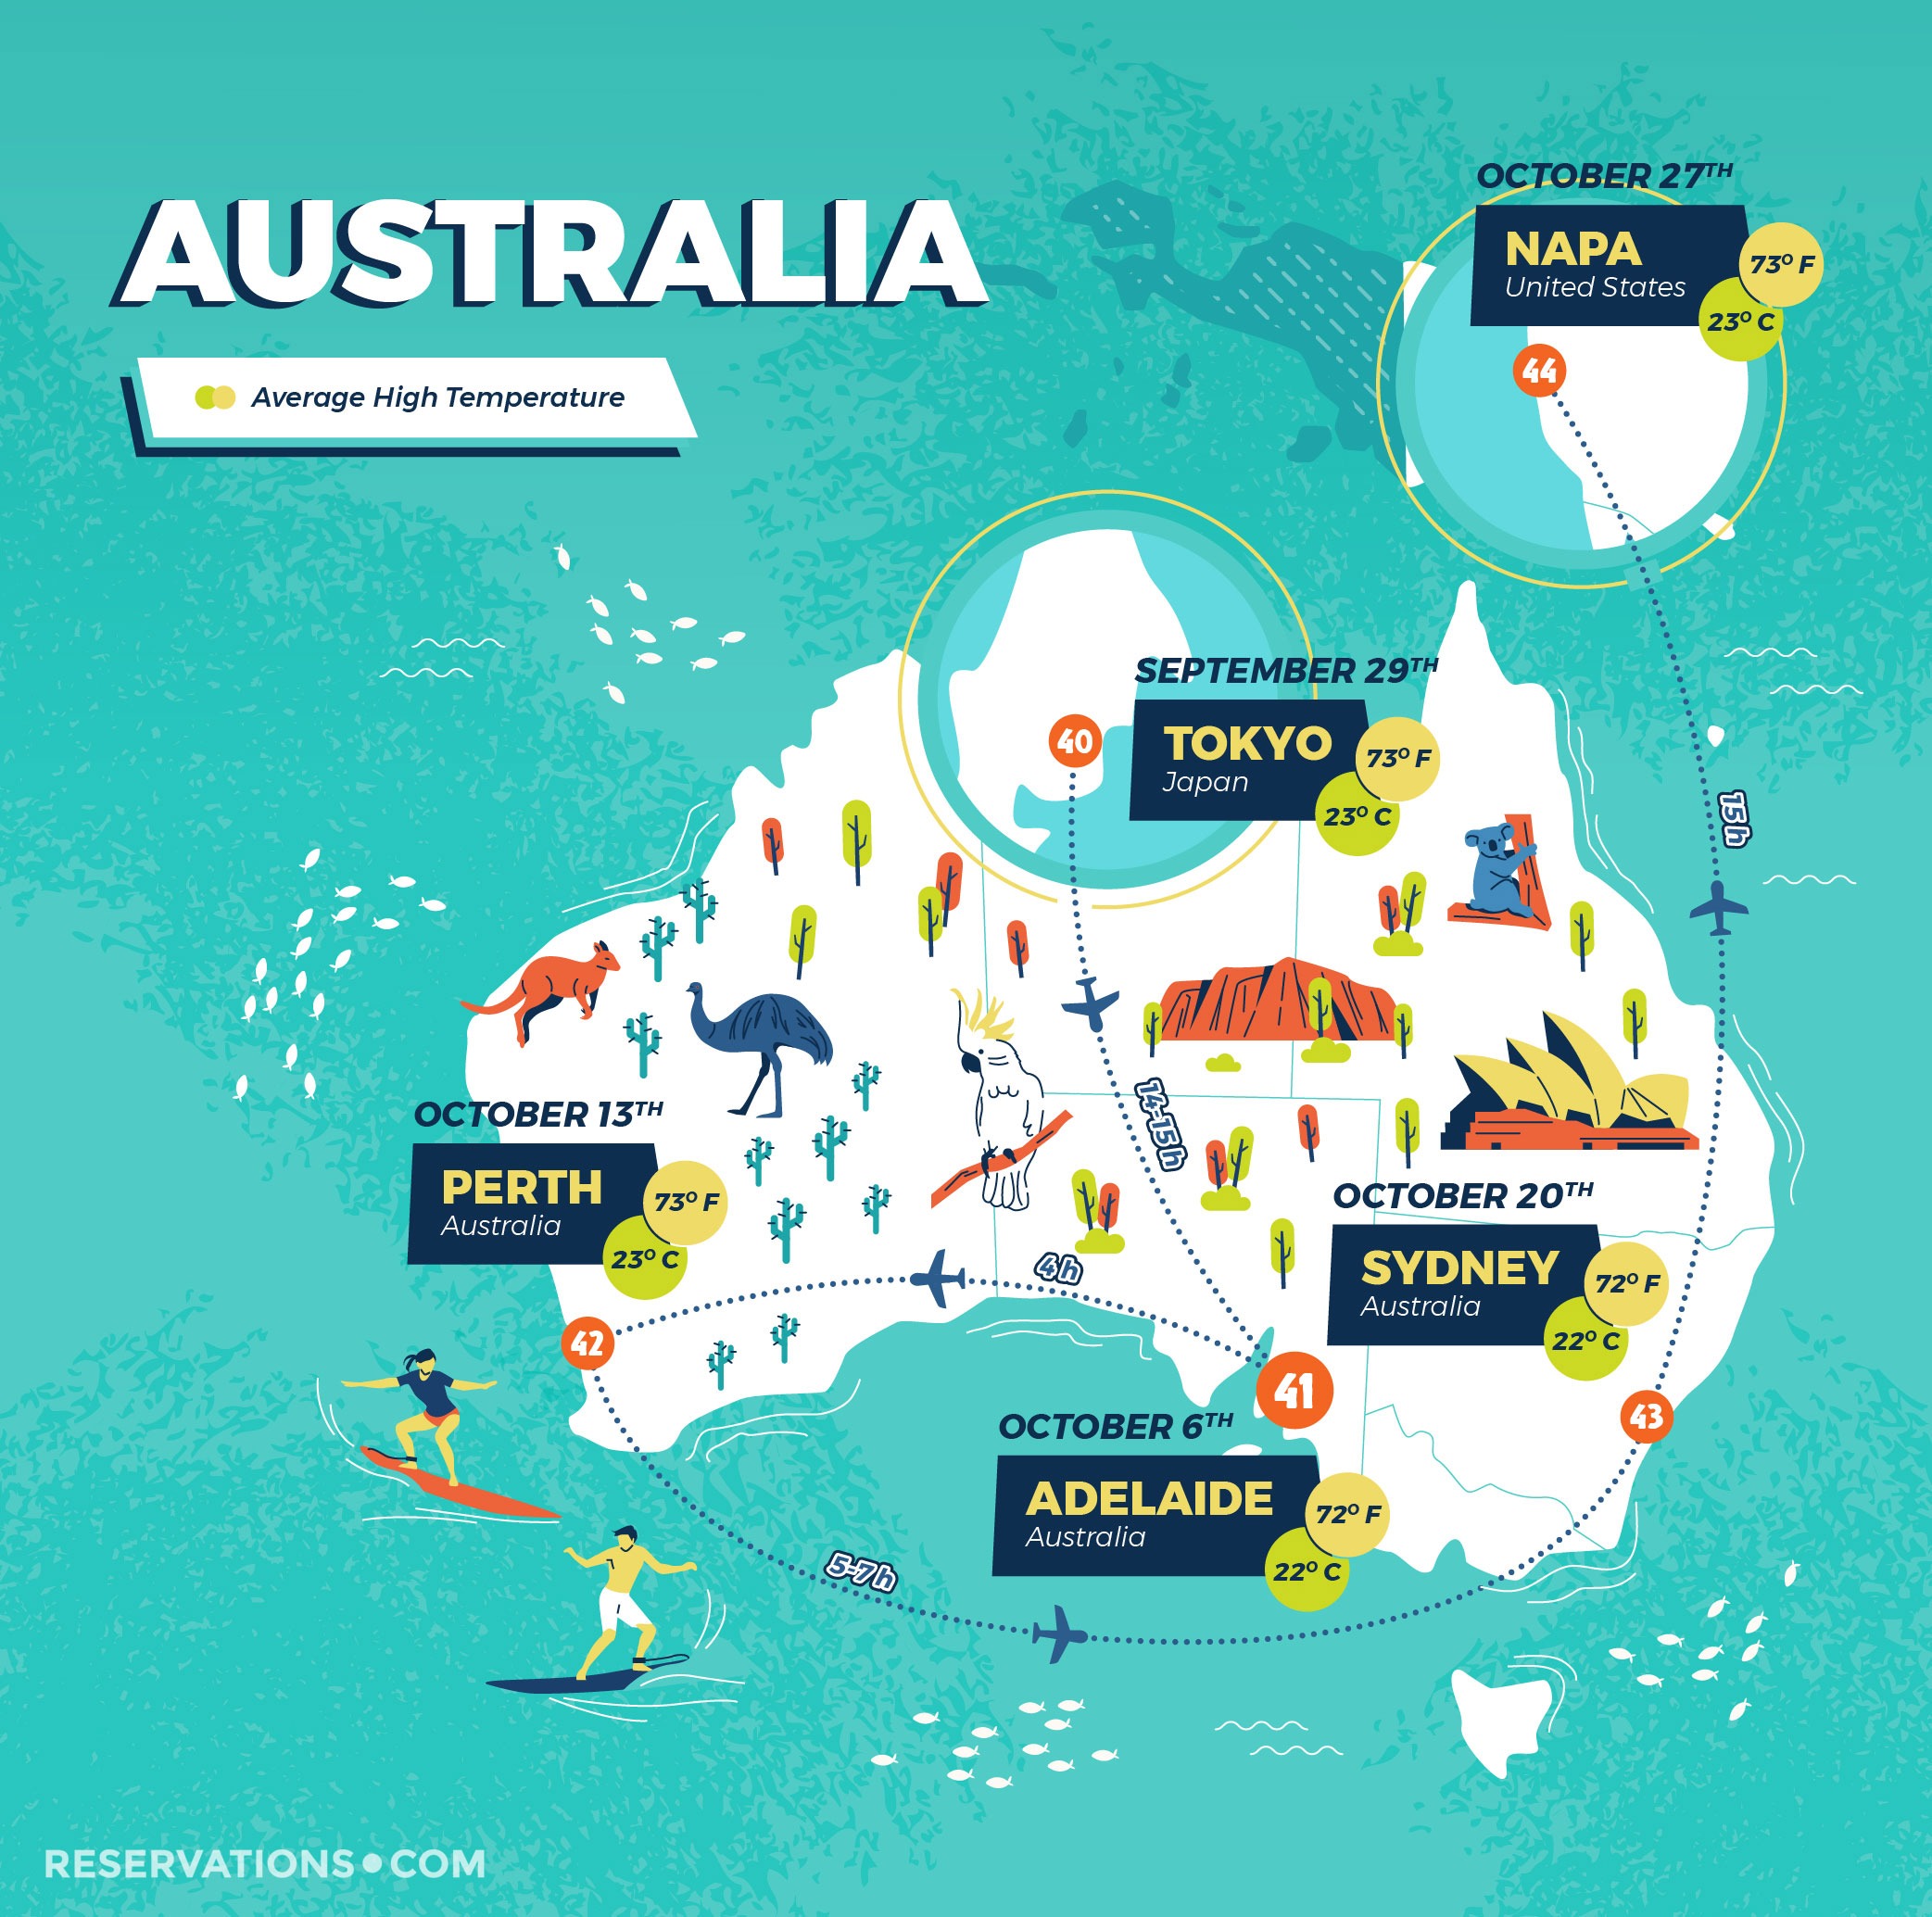 around the world perfect weather australia reservations.com